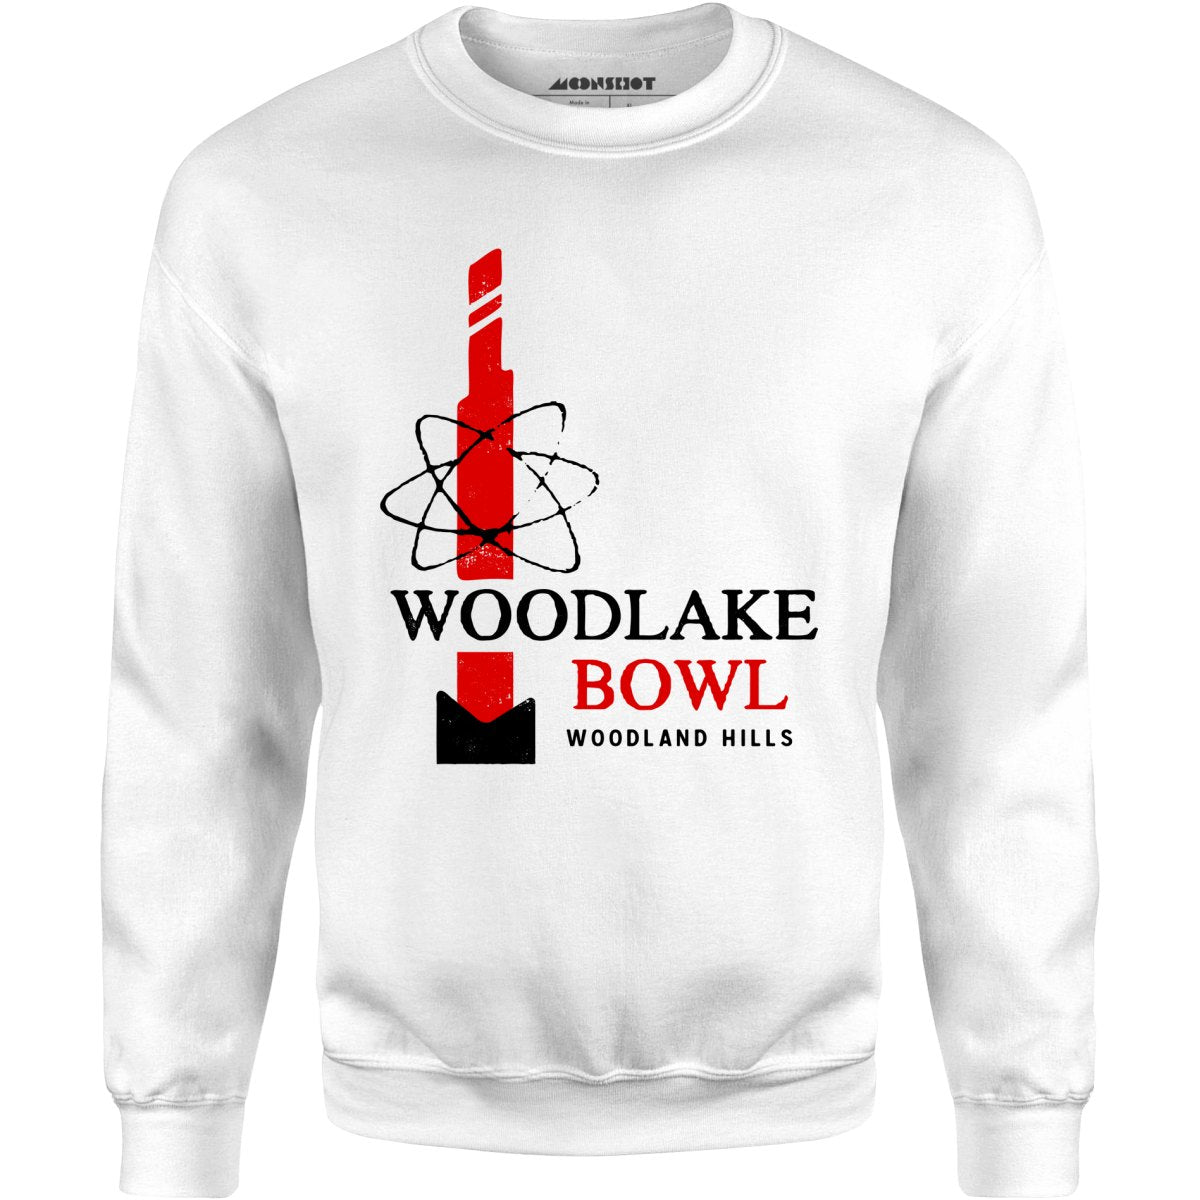 Woodlake Bowl - Woodland Hills, CA - Vintage Bowling Alley - Unisex Sweatshirt